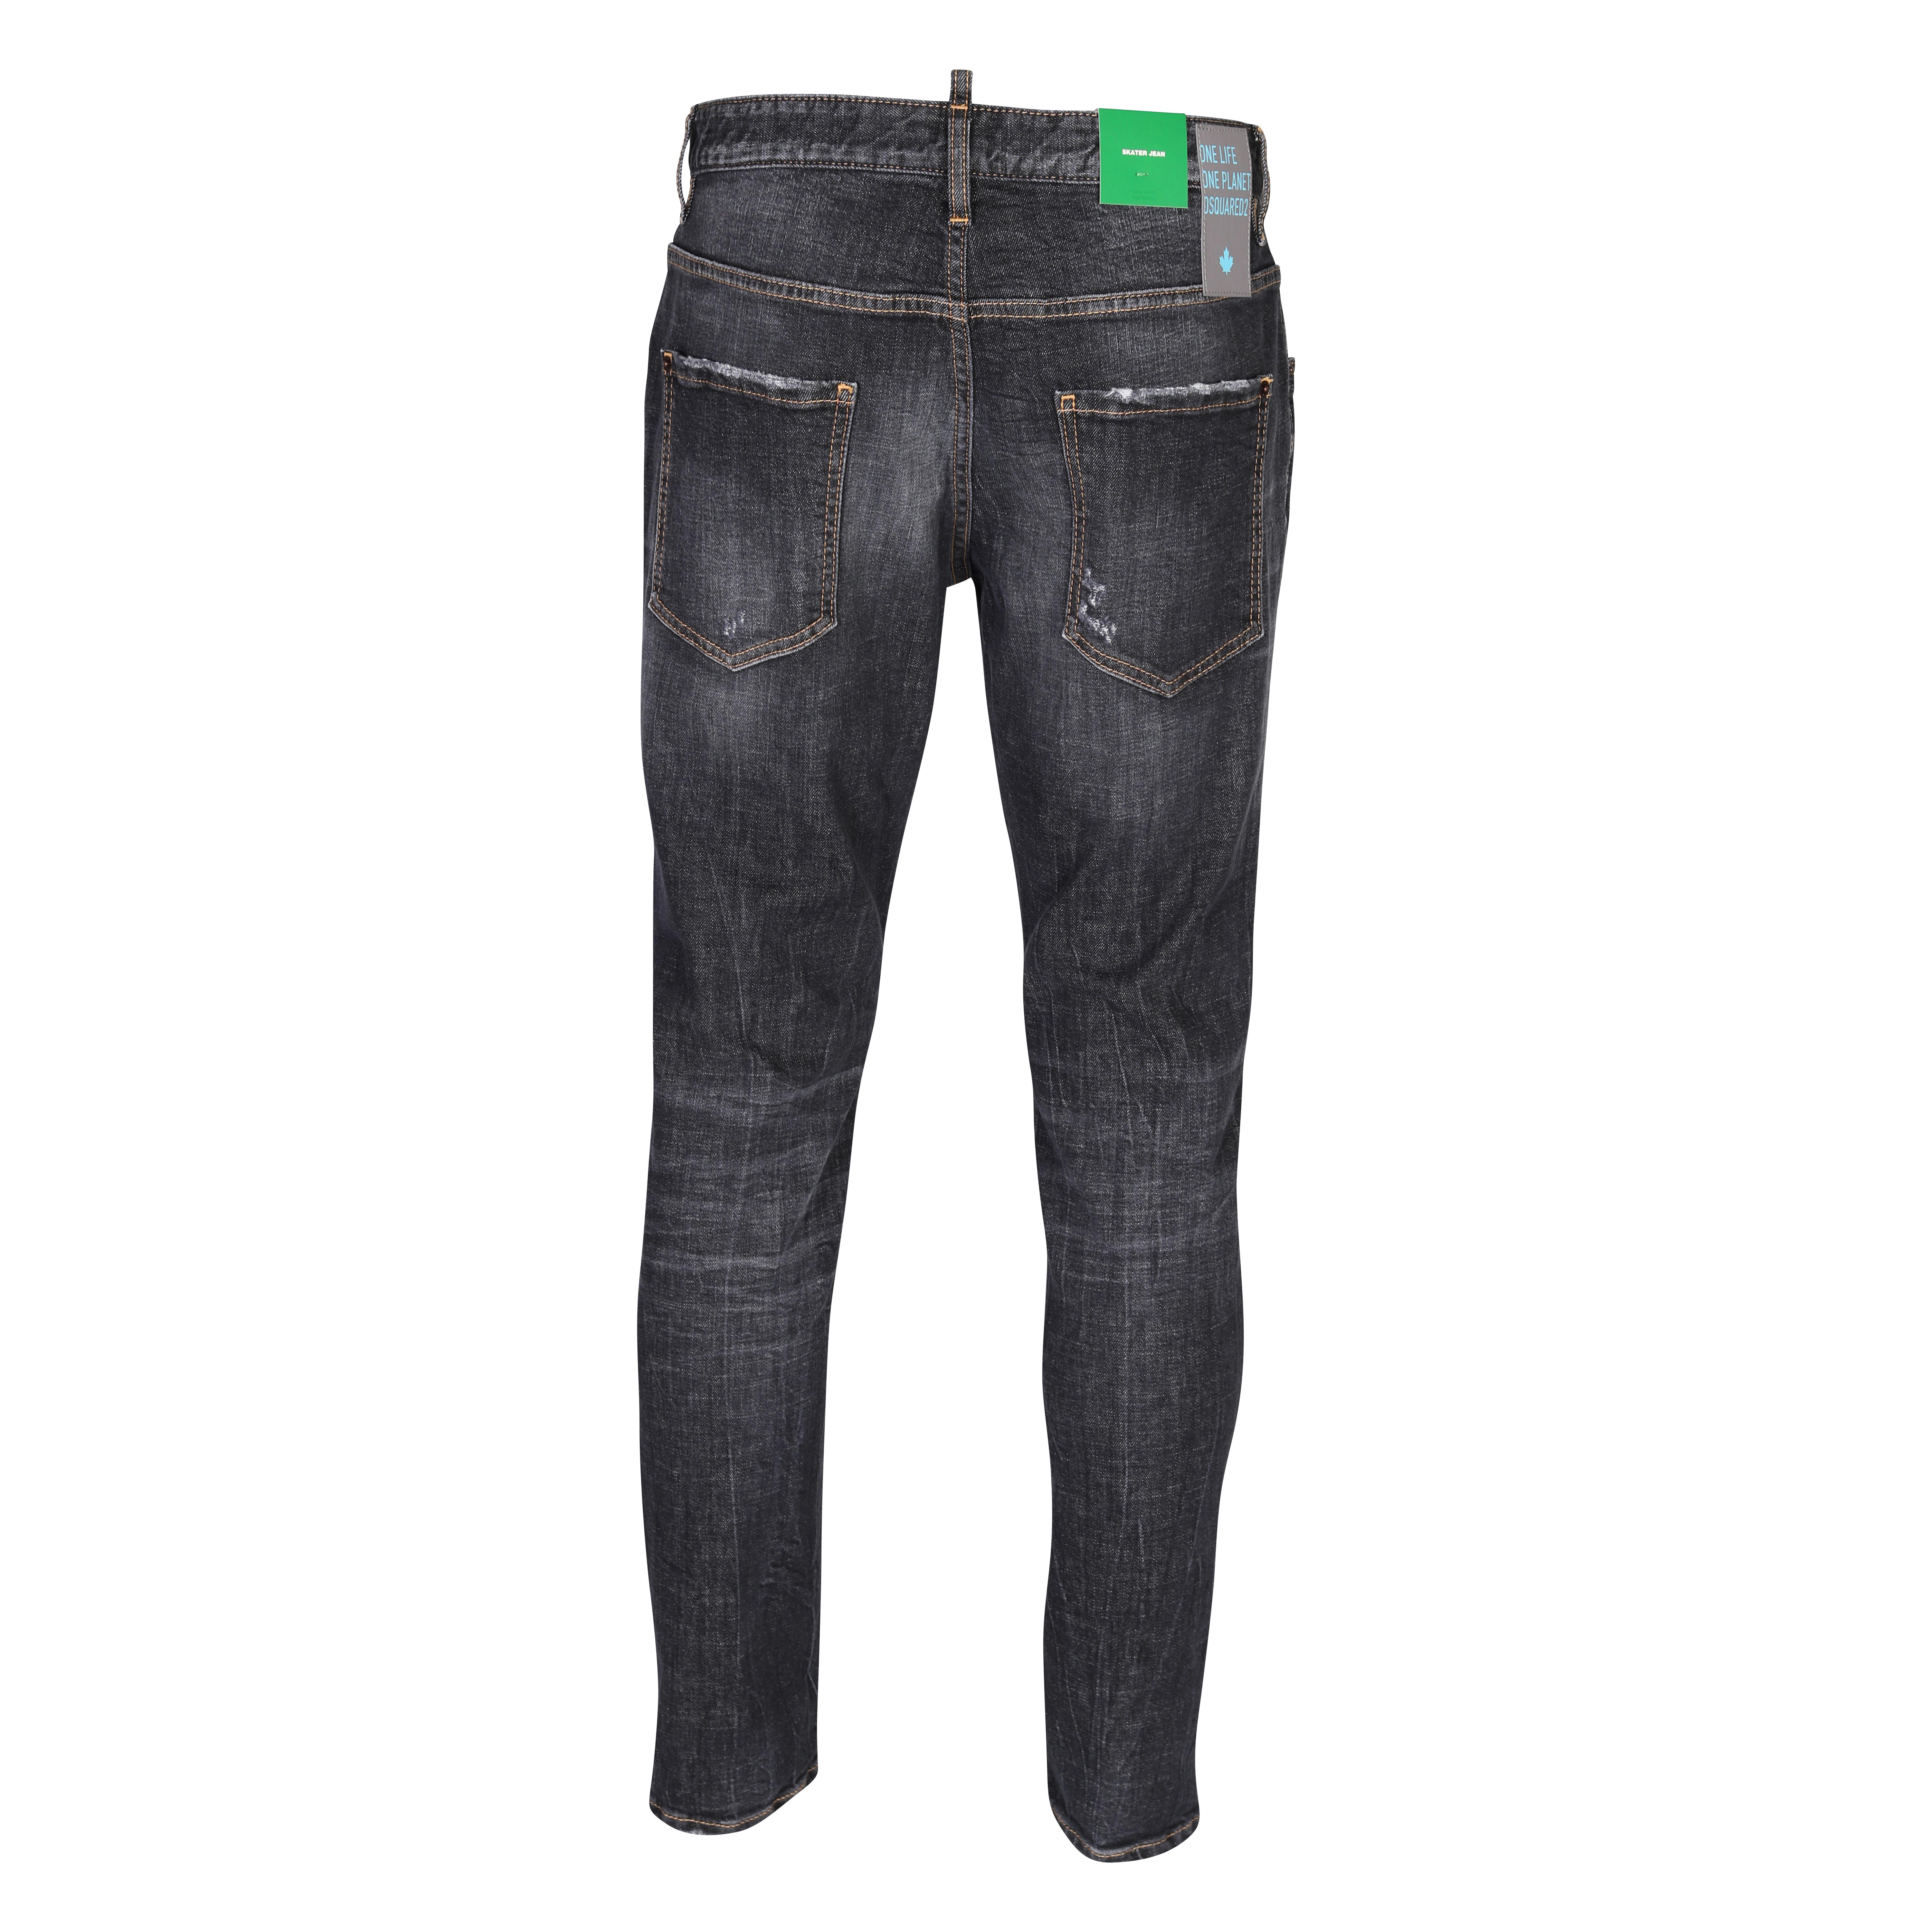 DSQUARED2 Green Label Skater Jeans in Washed Black 56